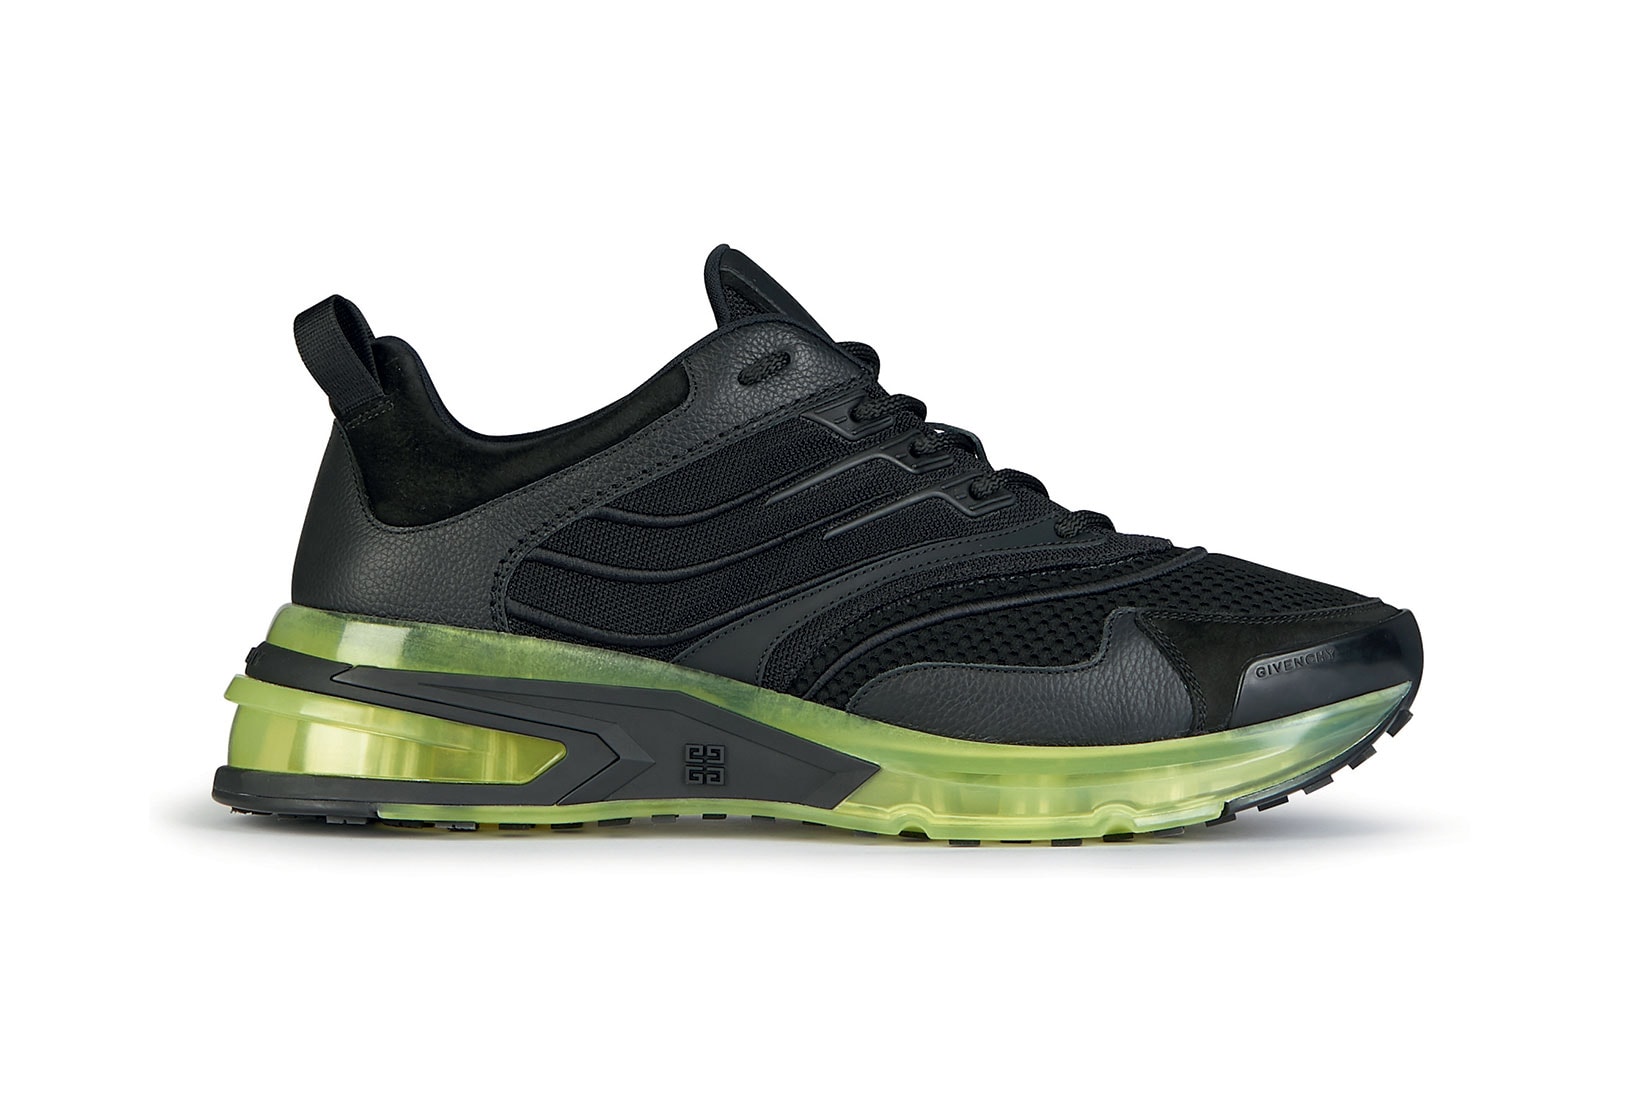 givenchy giv 1 unisex sneakers black neon green matthew m williams shoes kicks sneakerhead footwear lateral